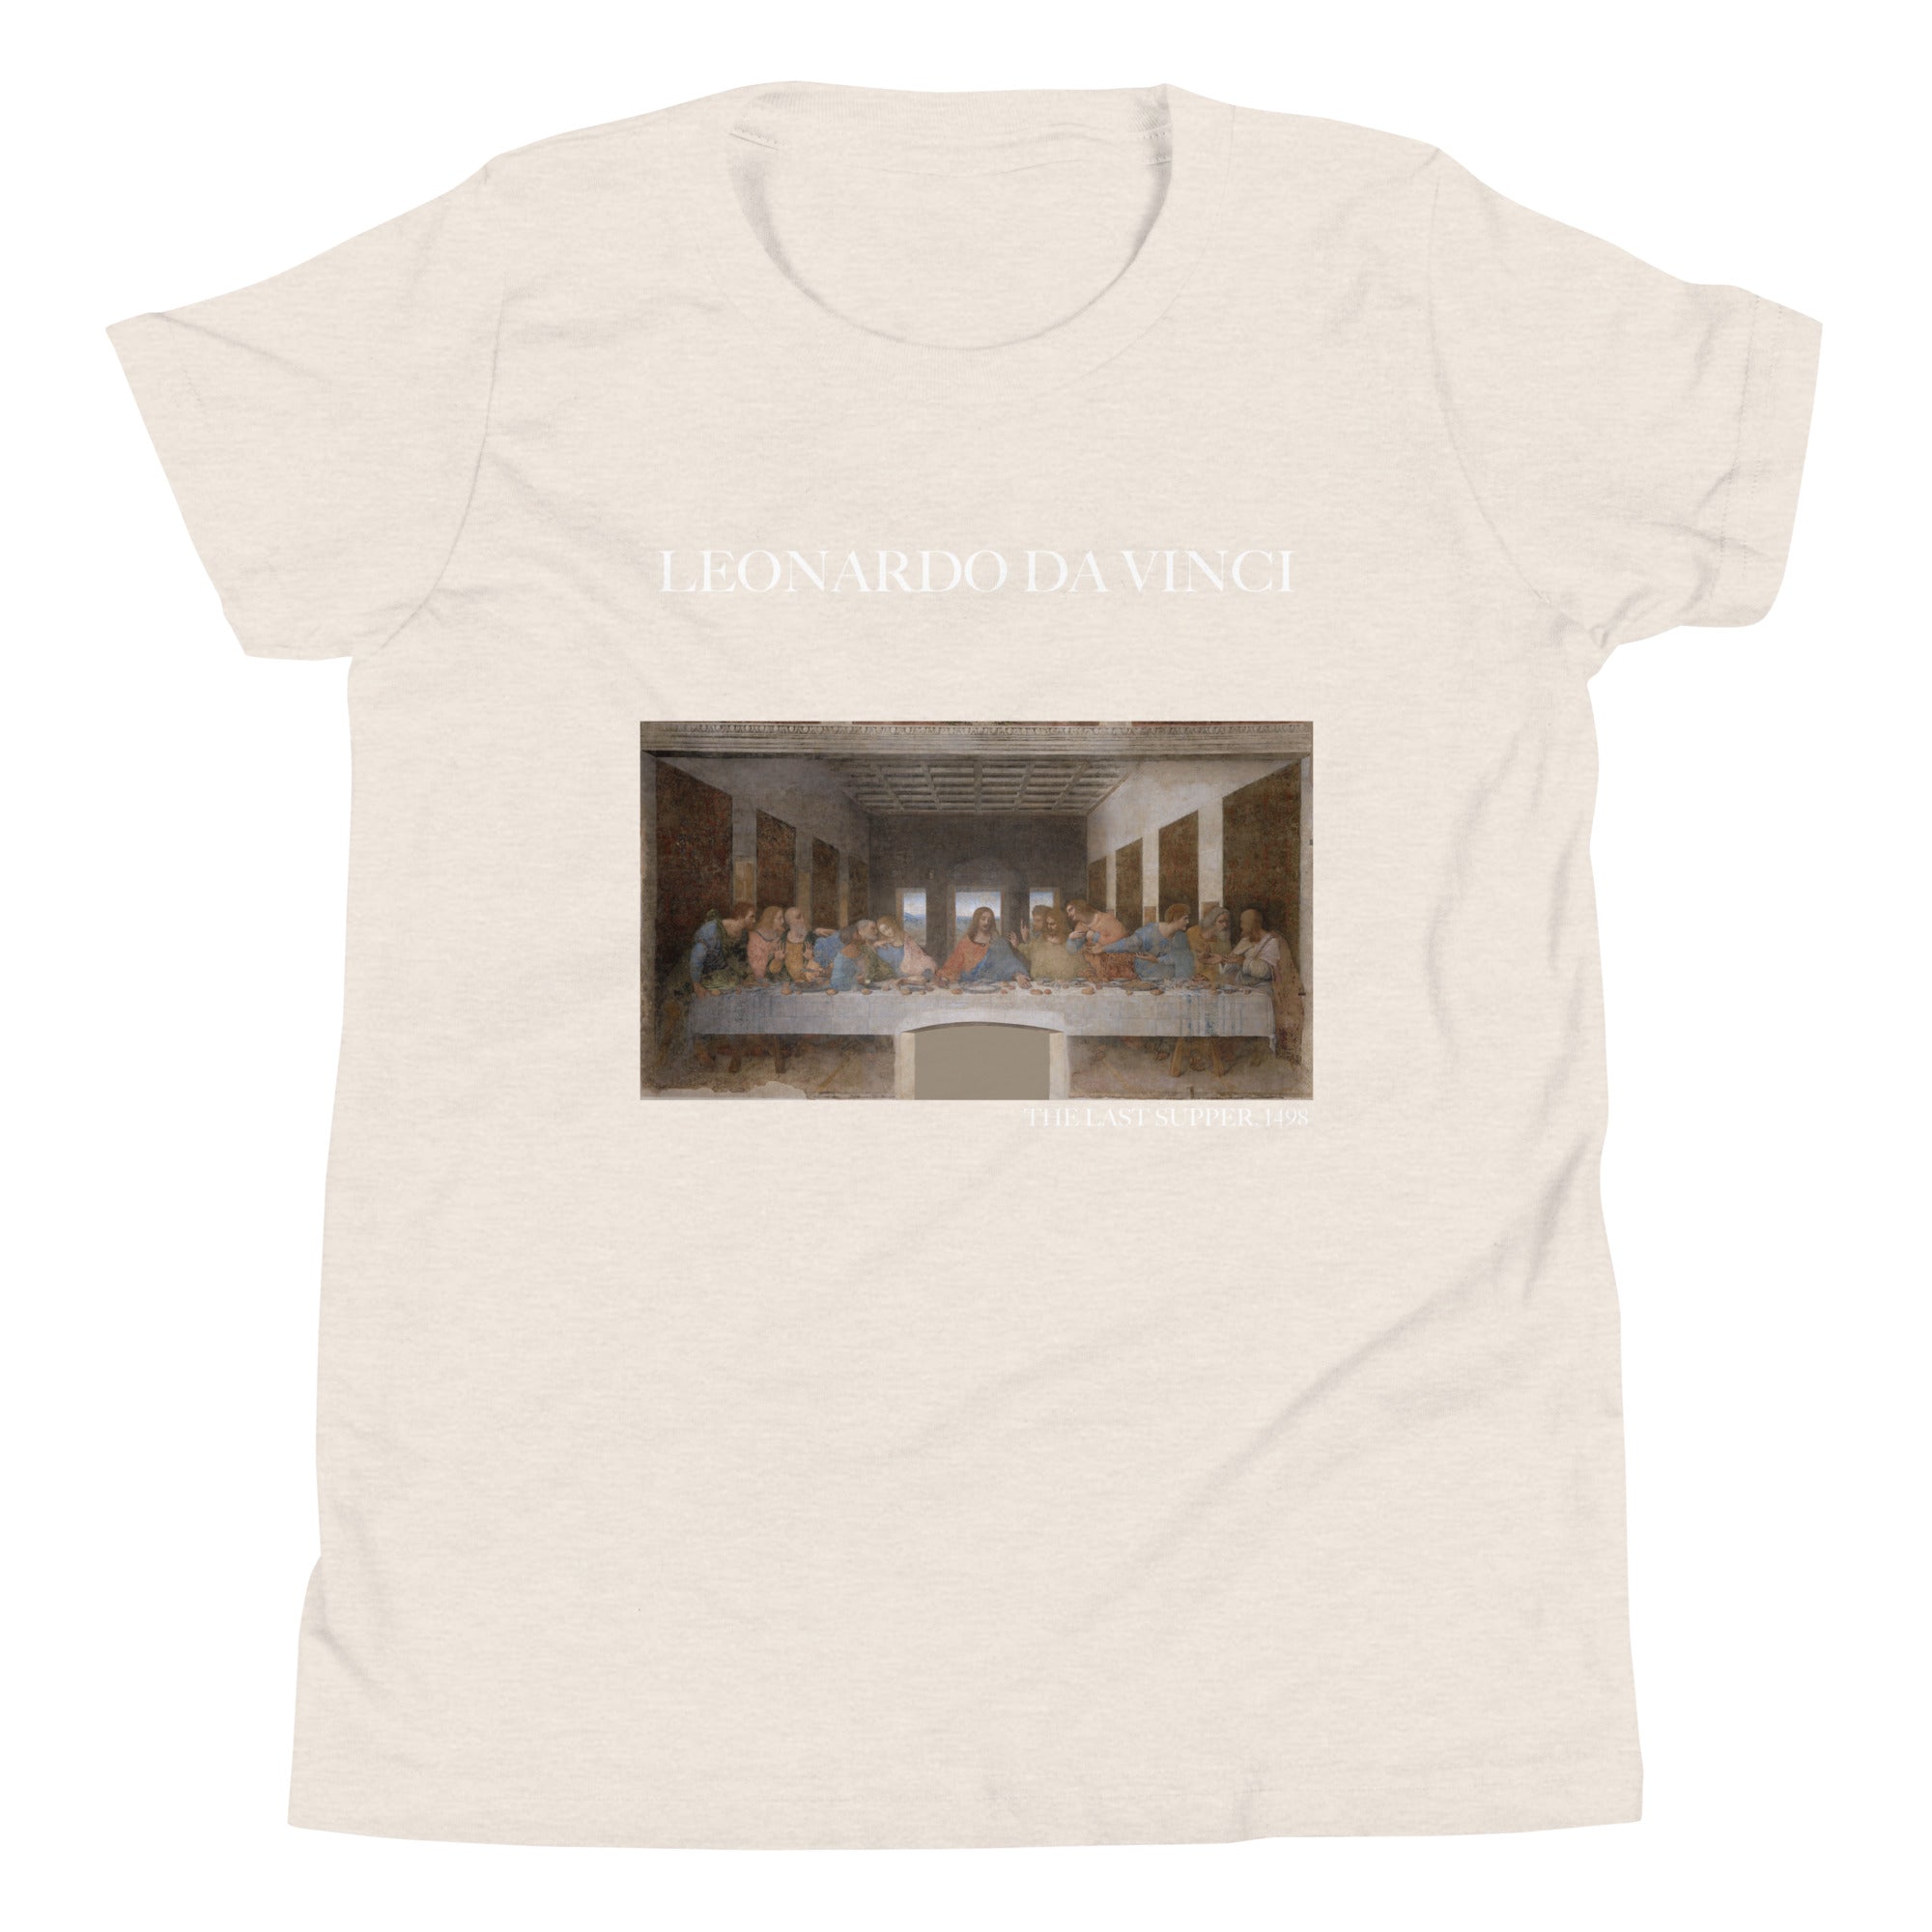 Leonardo da Vinci 'The Last Supper' Famous Painting Short Sleeve T-Shirt | Premium Youth Art Tee